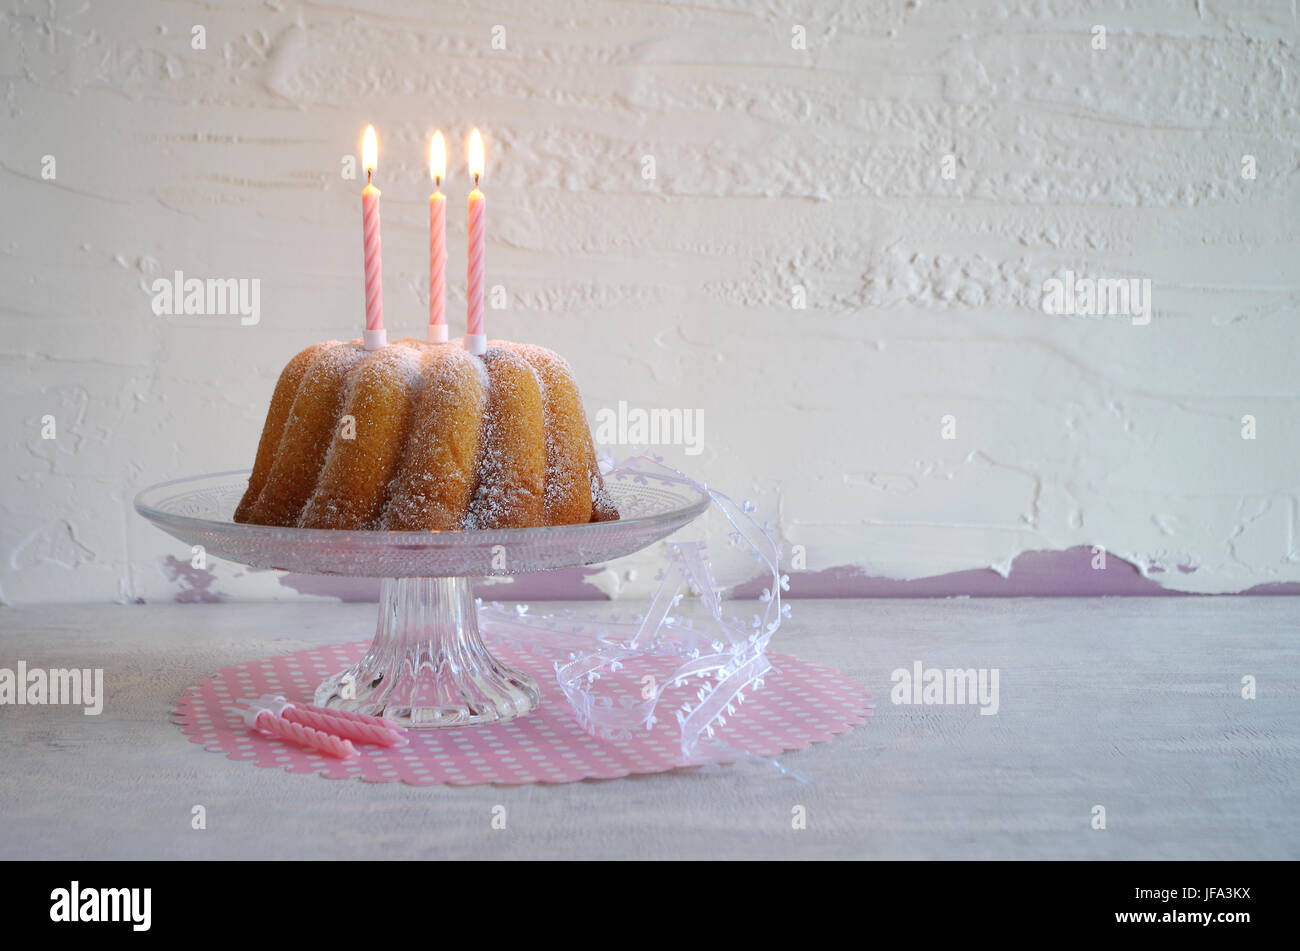 birthday cake Stock Photo - Alamy